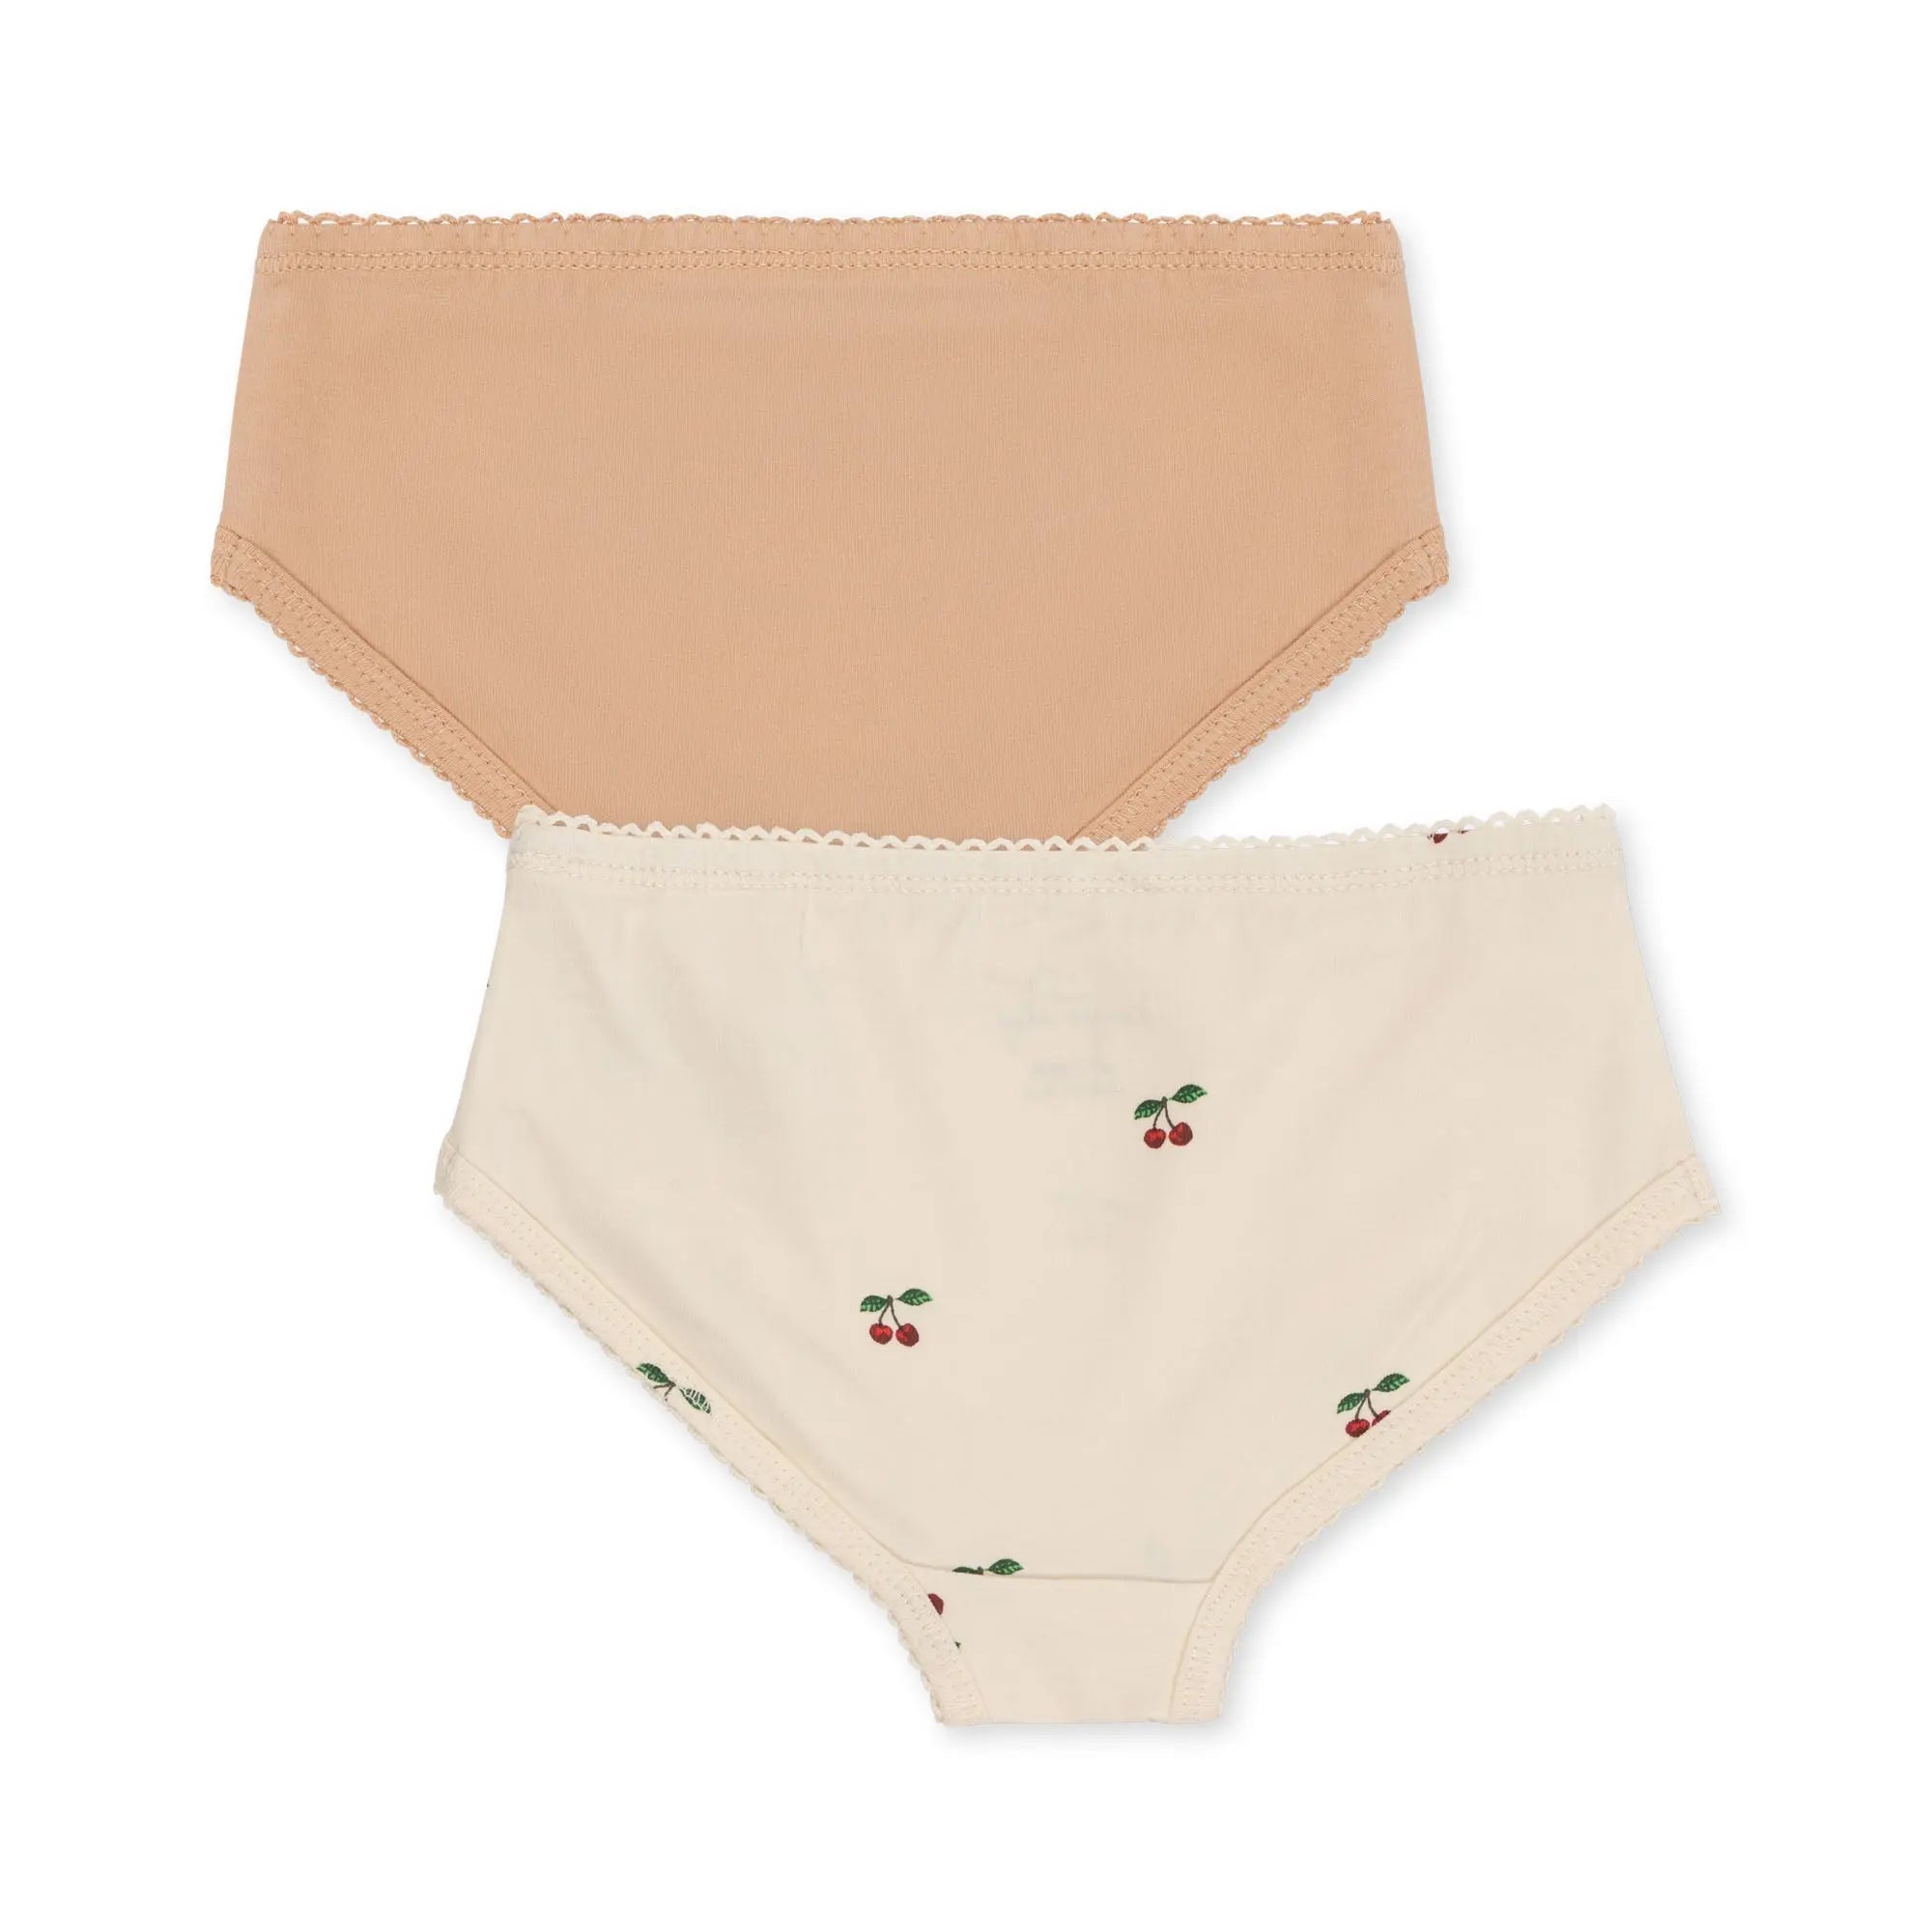 Basic 2 Pack Girl Underpants - Cherry/Toasted Almond  Konges Sløjd   